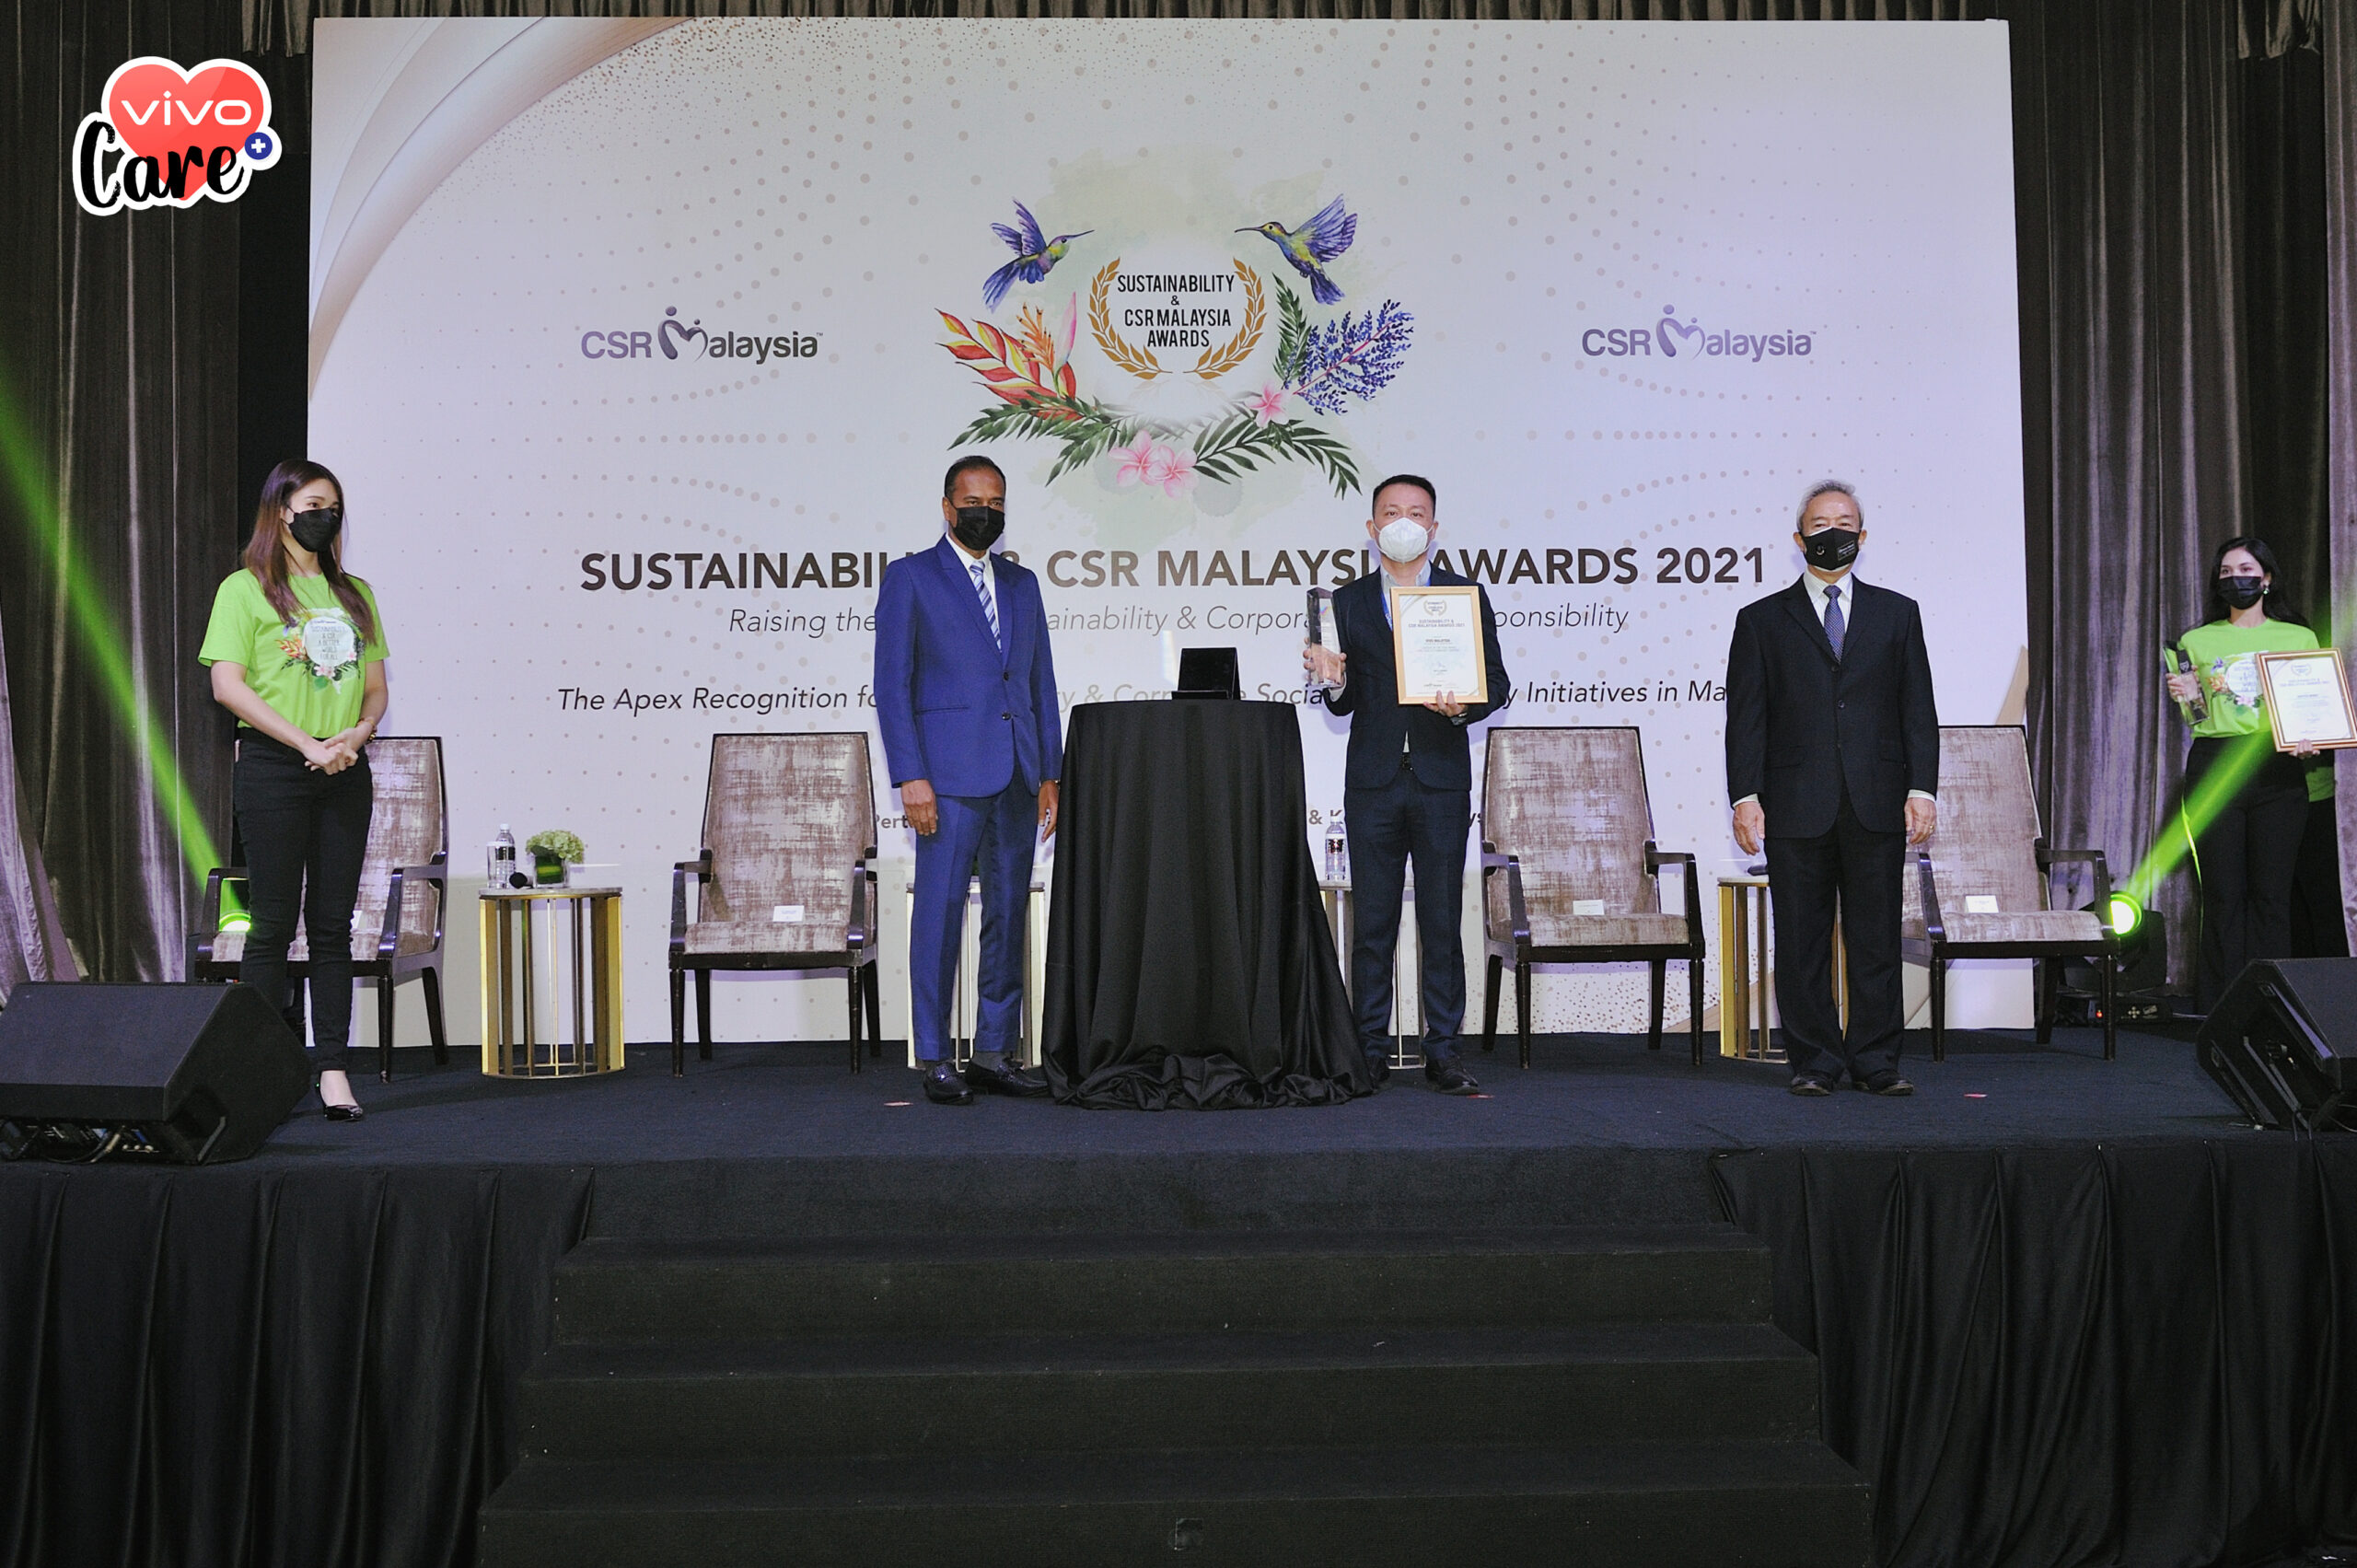 vivo Malaysia @ Sustainability and CSR Malaysia Awards 2021 2 scaled